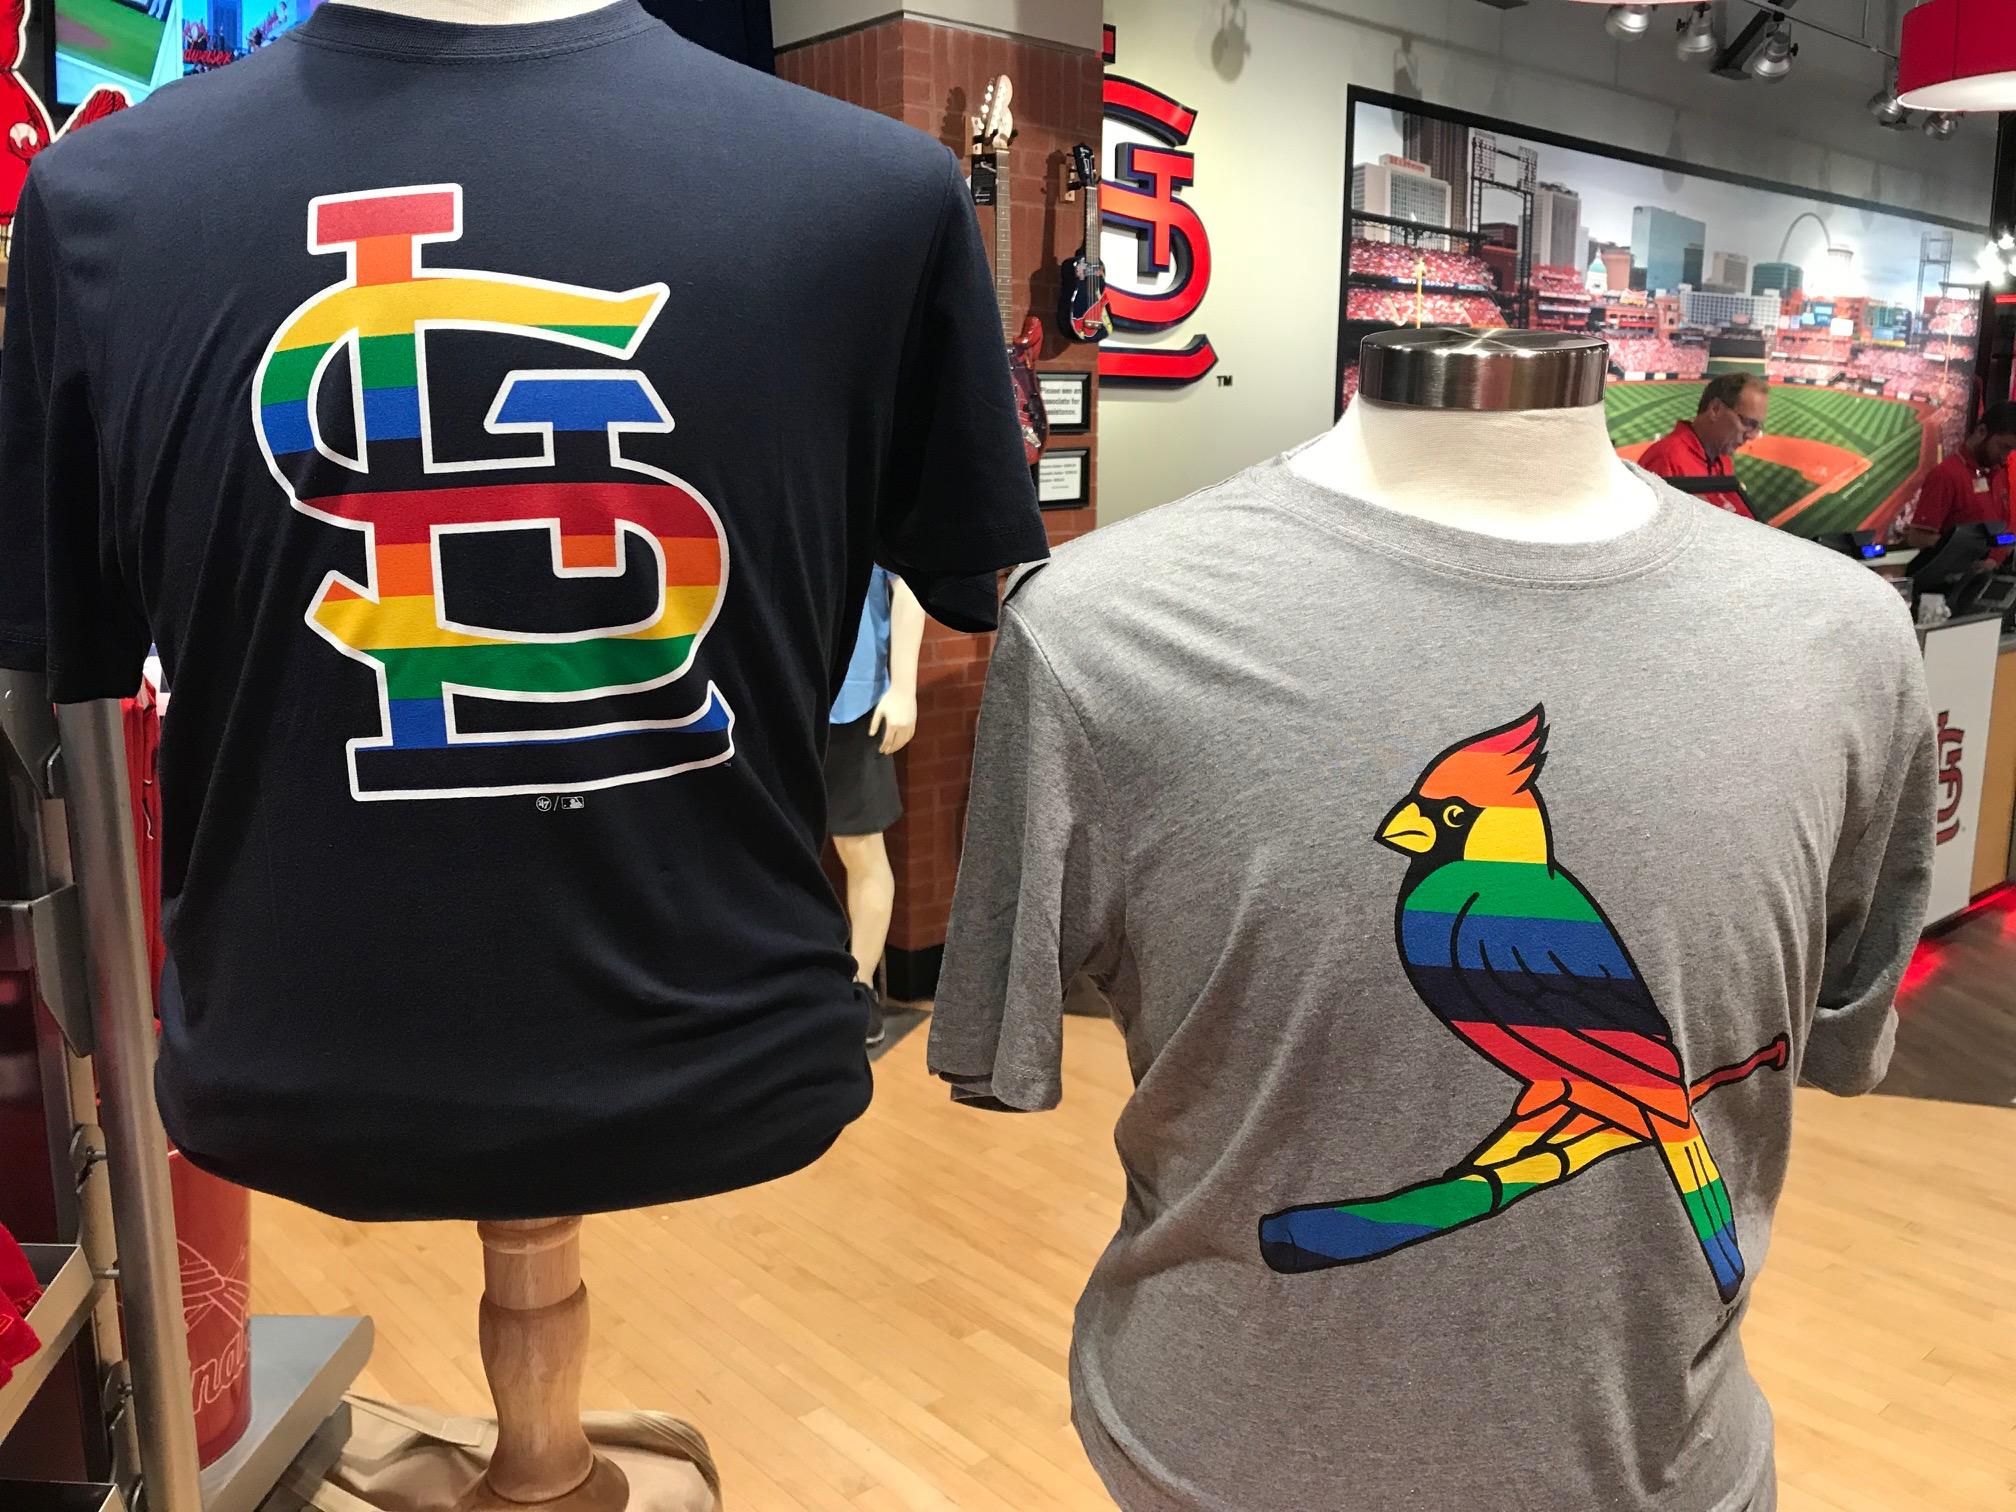 stl cardinals pride shirt